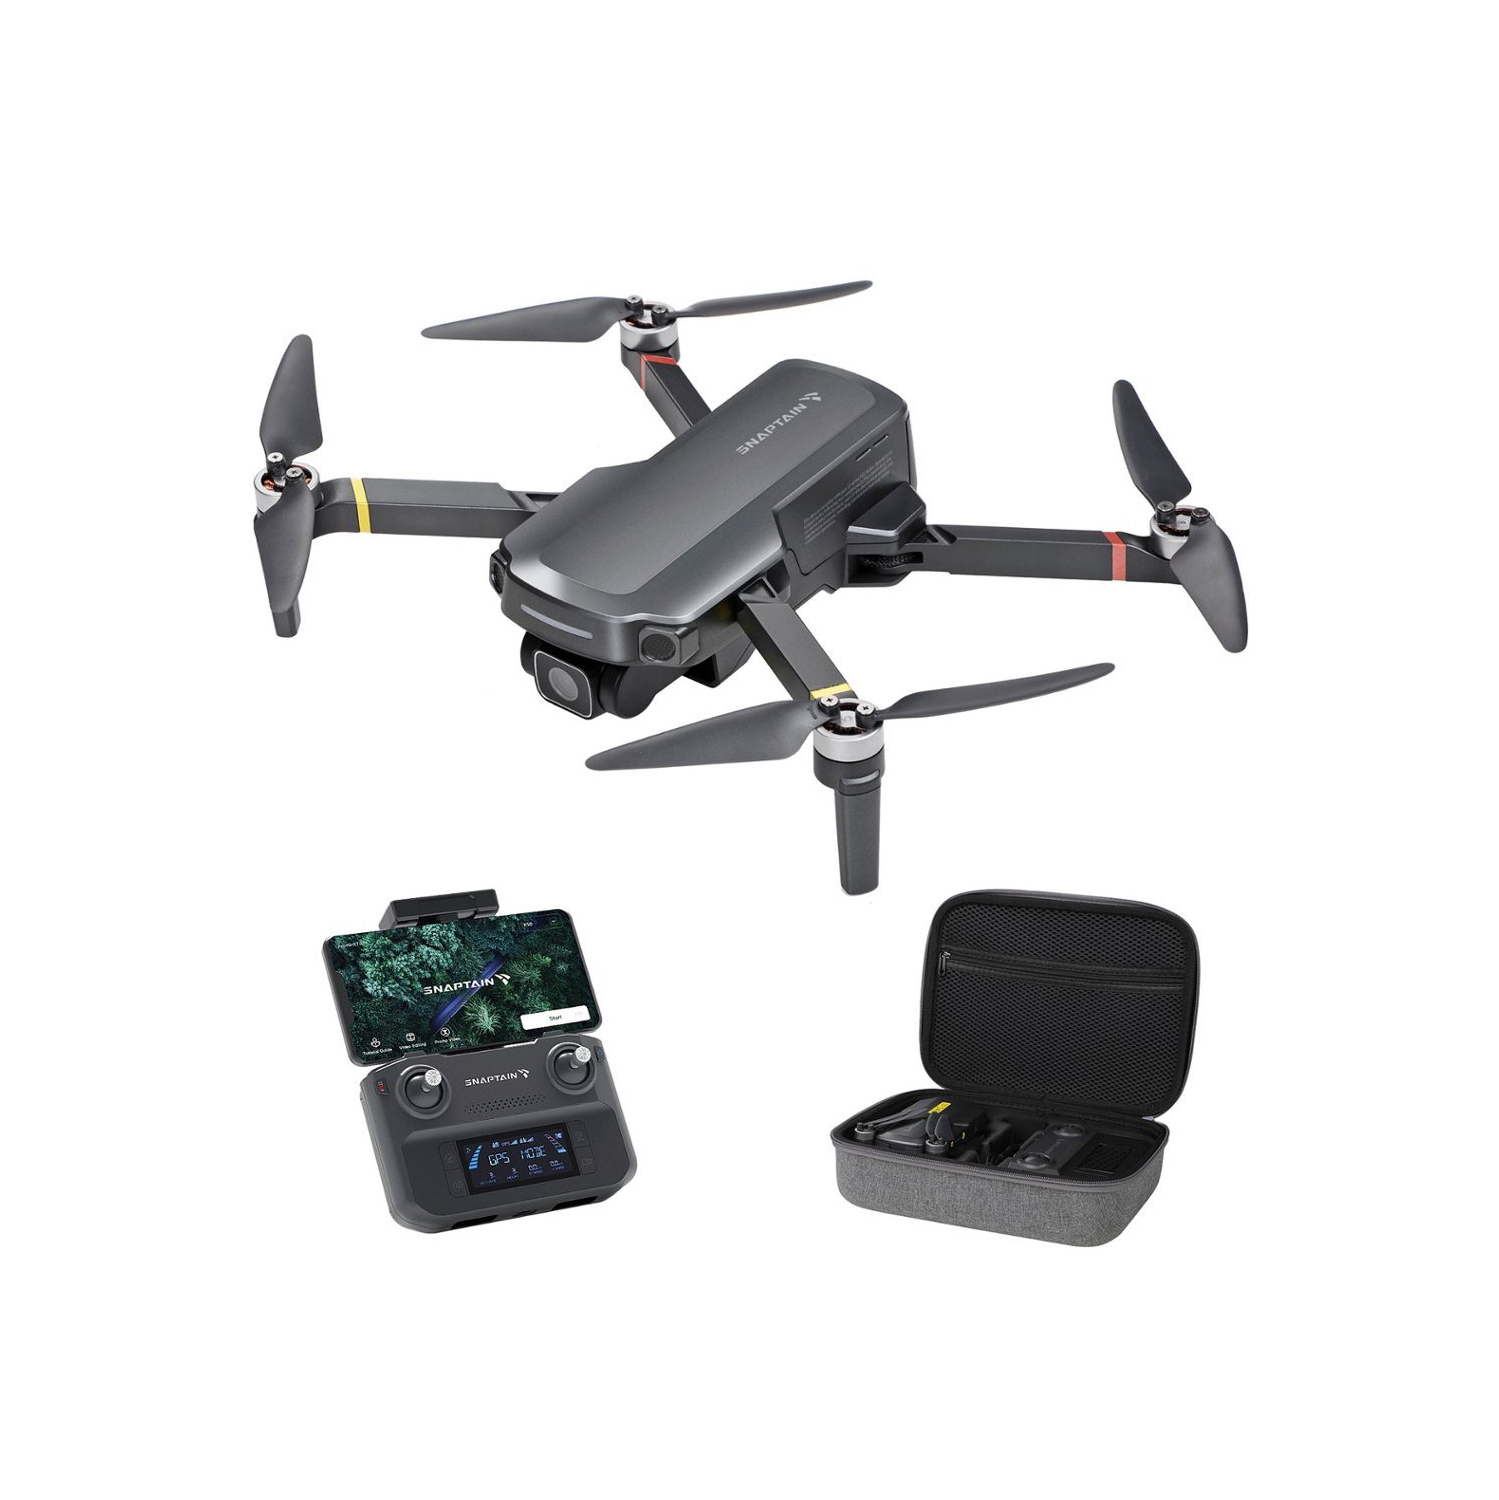 Vantop - Snaptain P30 GPS 4K UHD camera Drone with Remote Controller - Gray